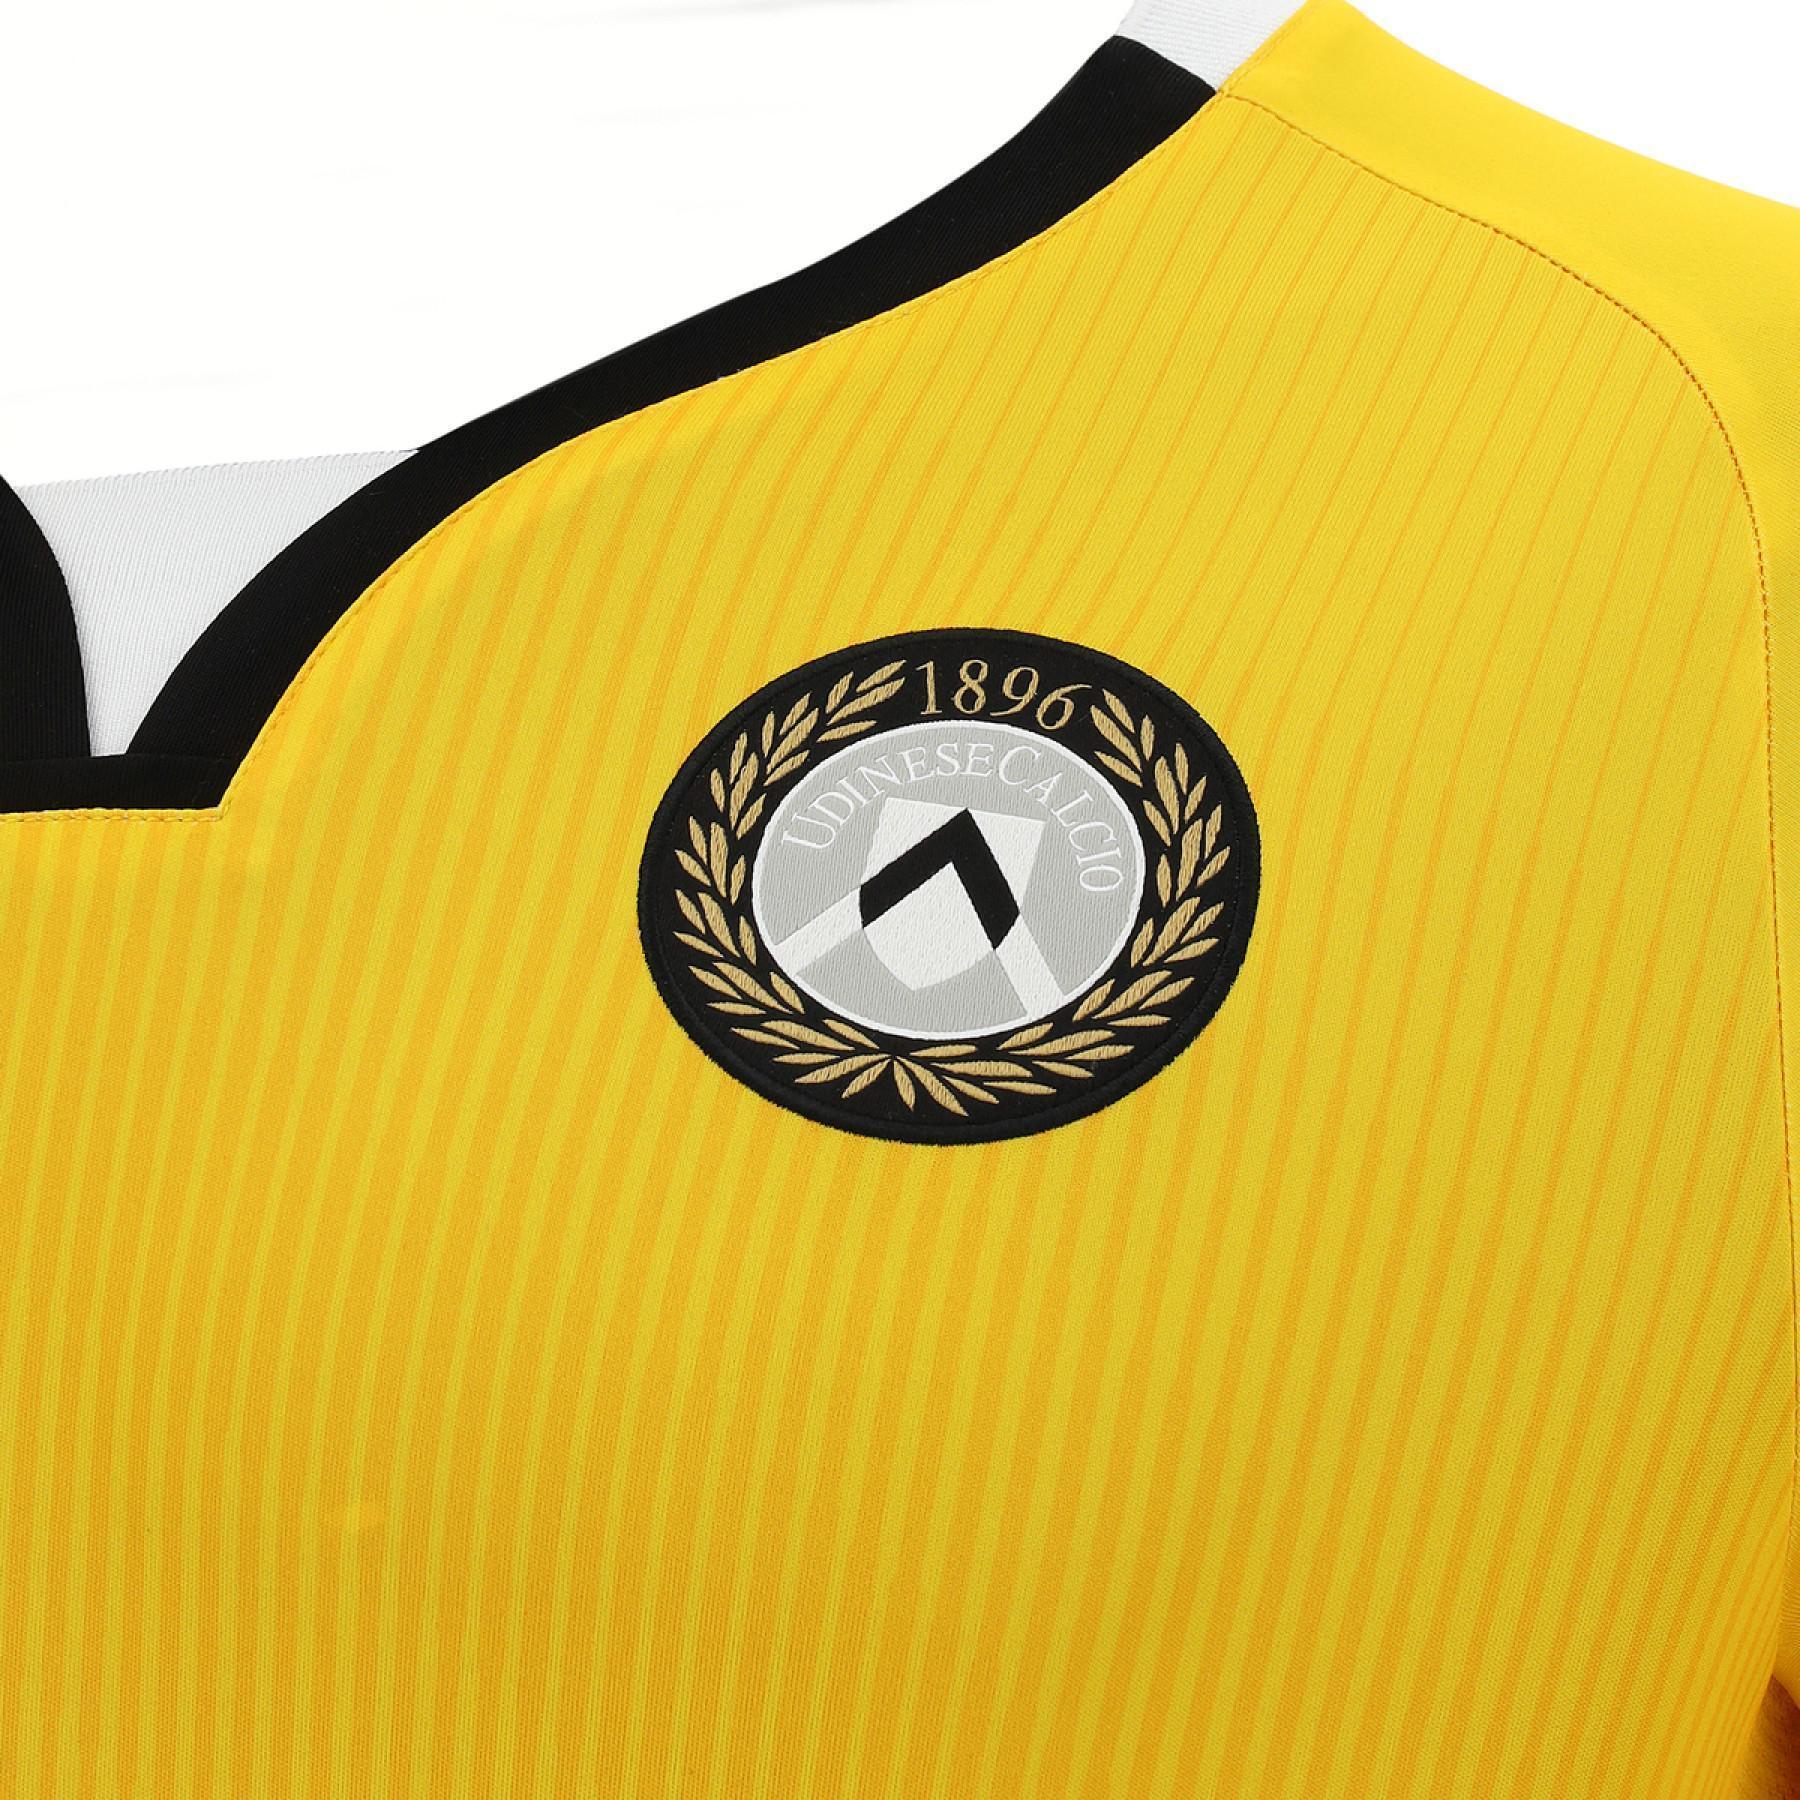 Camiseta tercera equipación Udinese calcio 2020/21